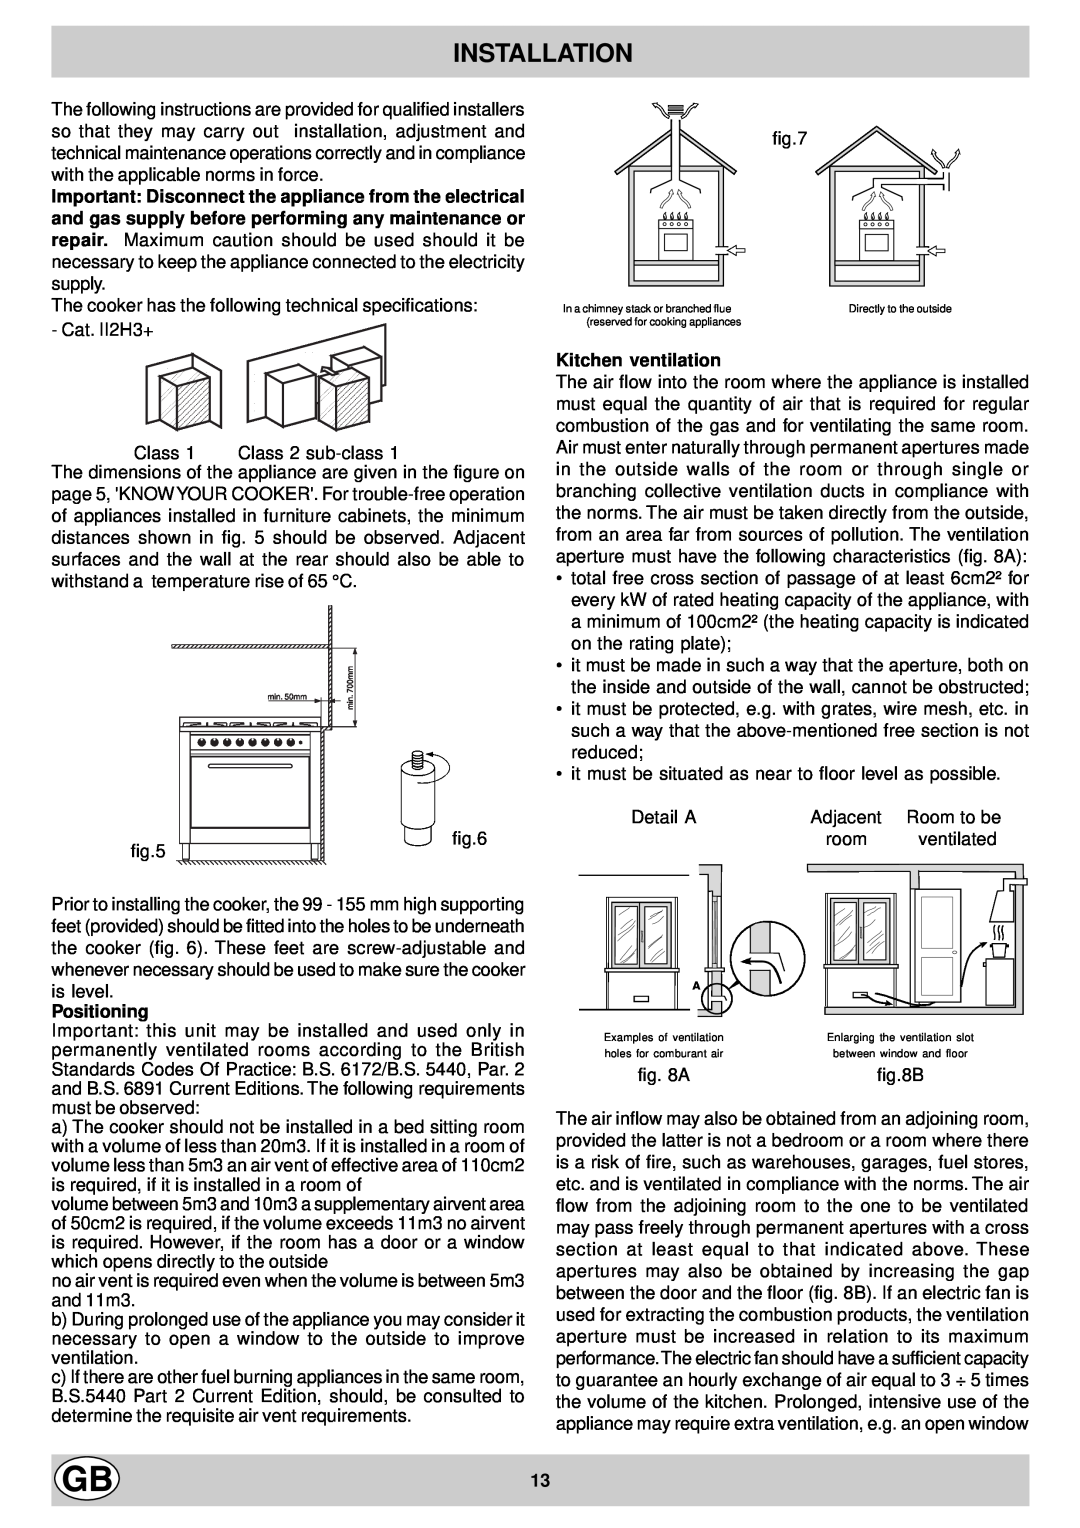 Hotpoint EG900X manual Installation, Kitchen ventilation, Positioning 